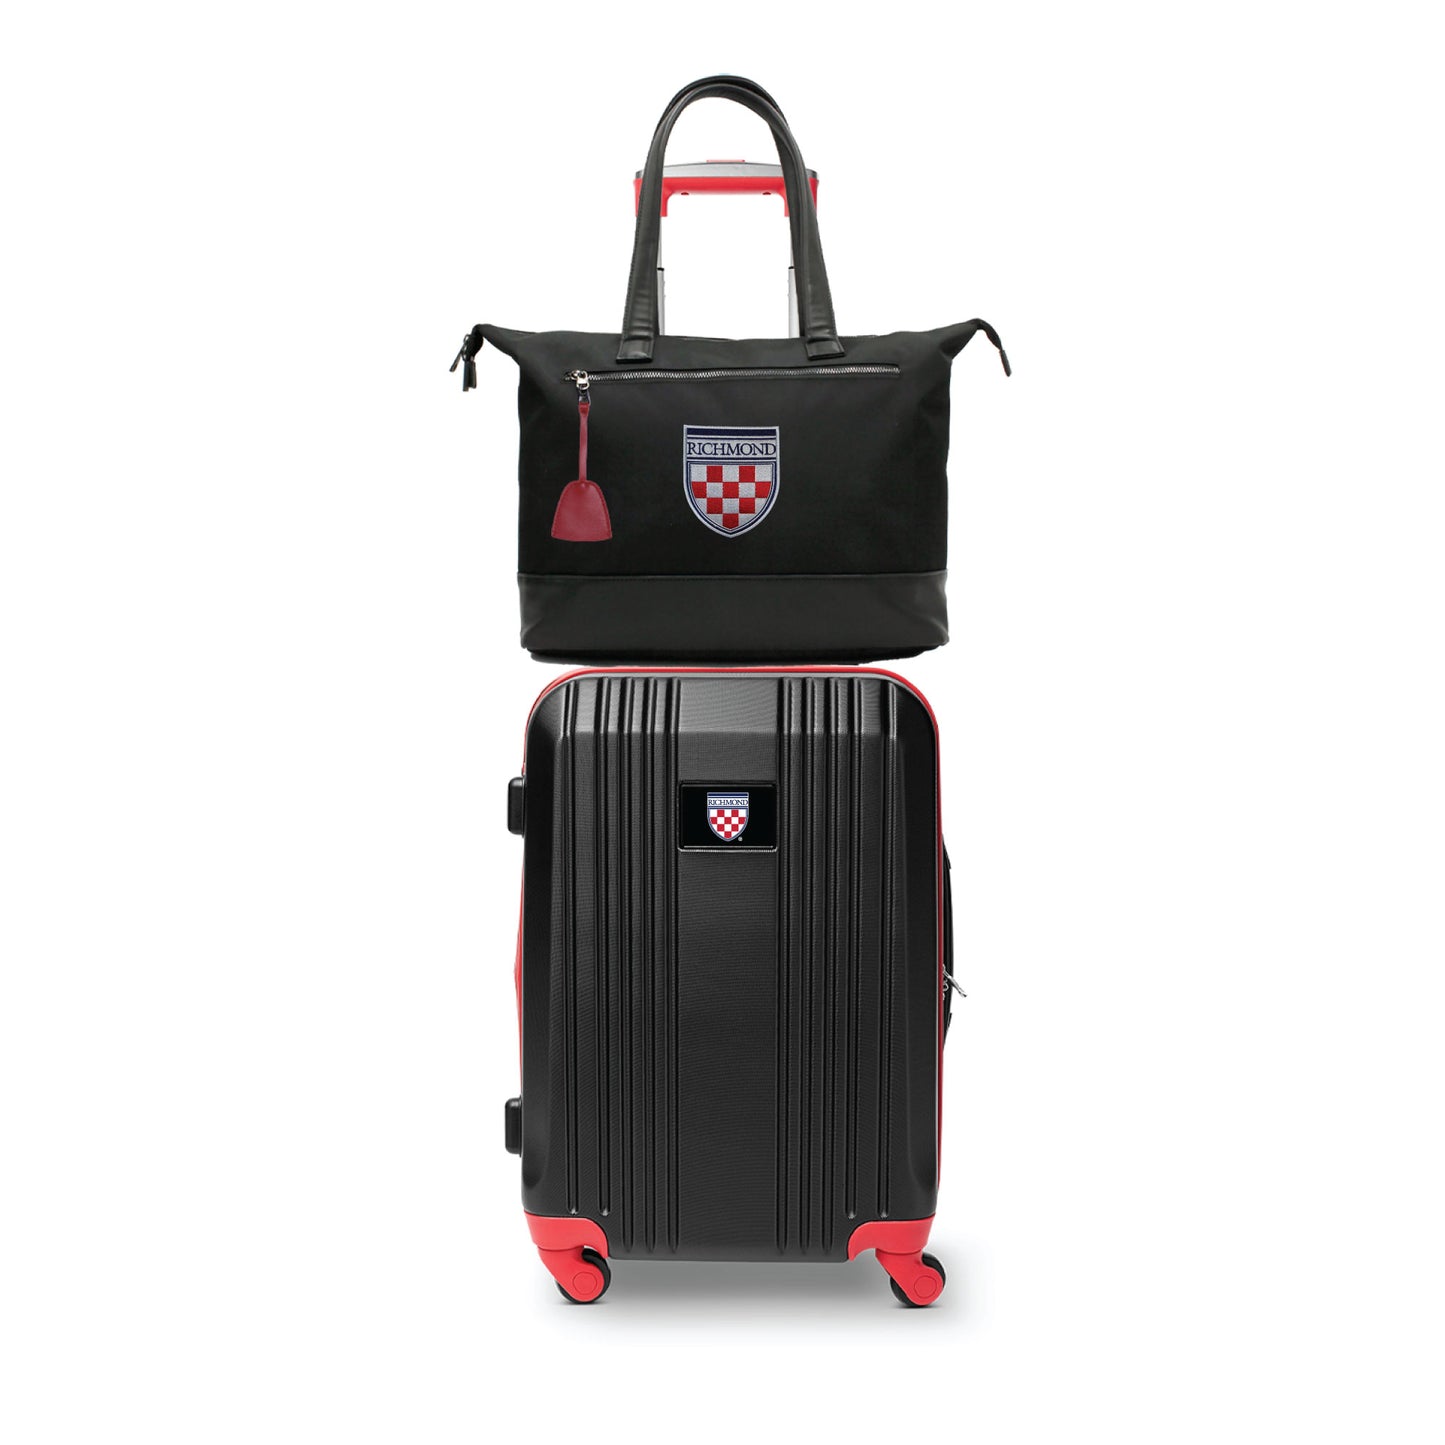 Richmond Premium Laptop Tote Bag and Luggage Set